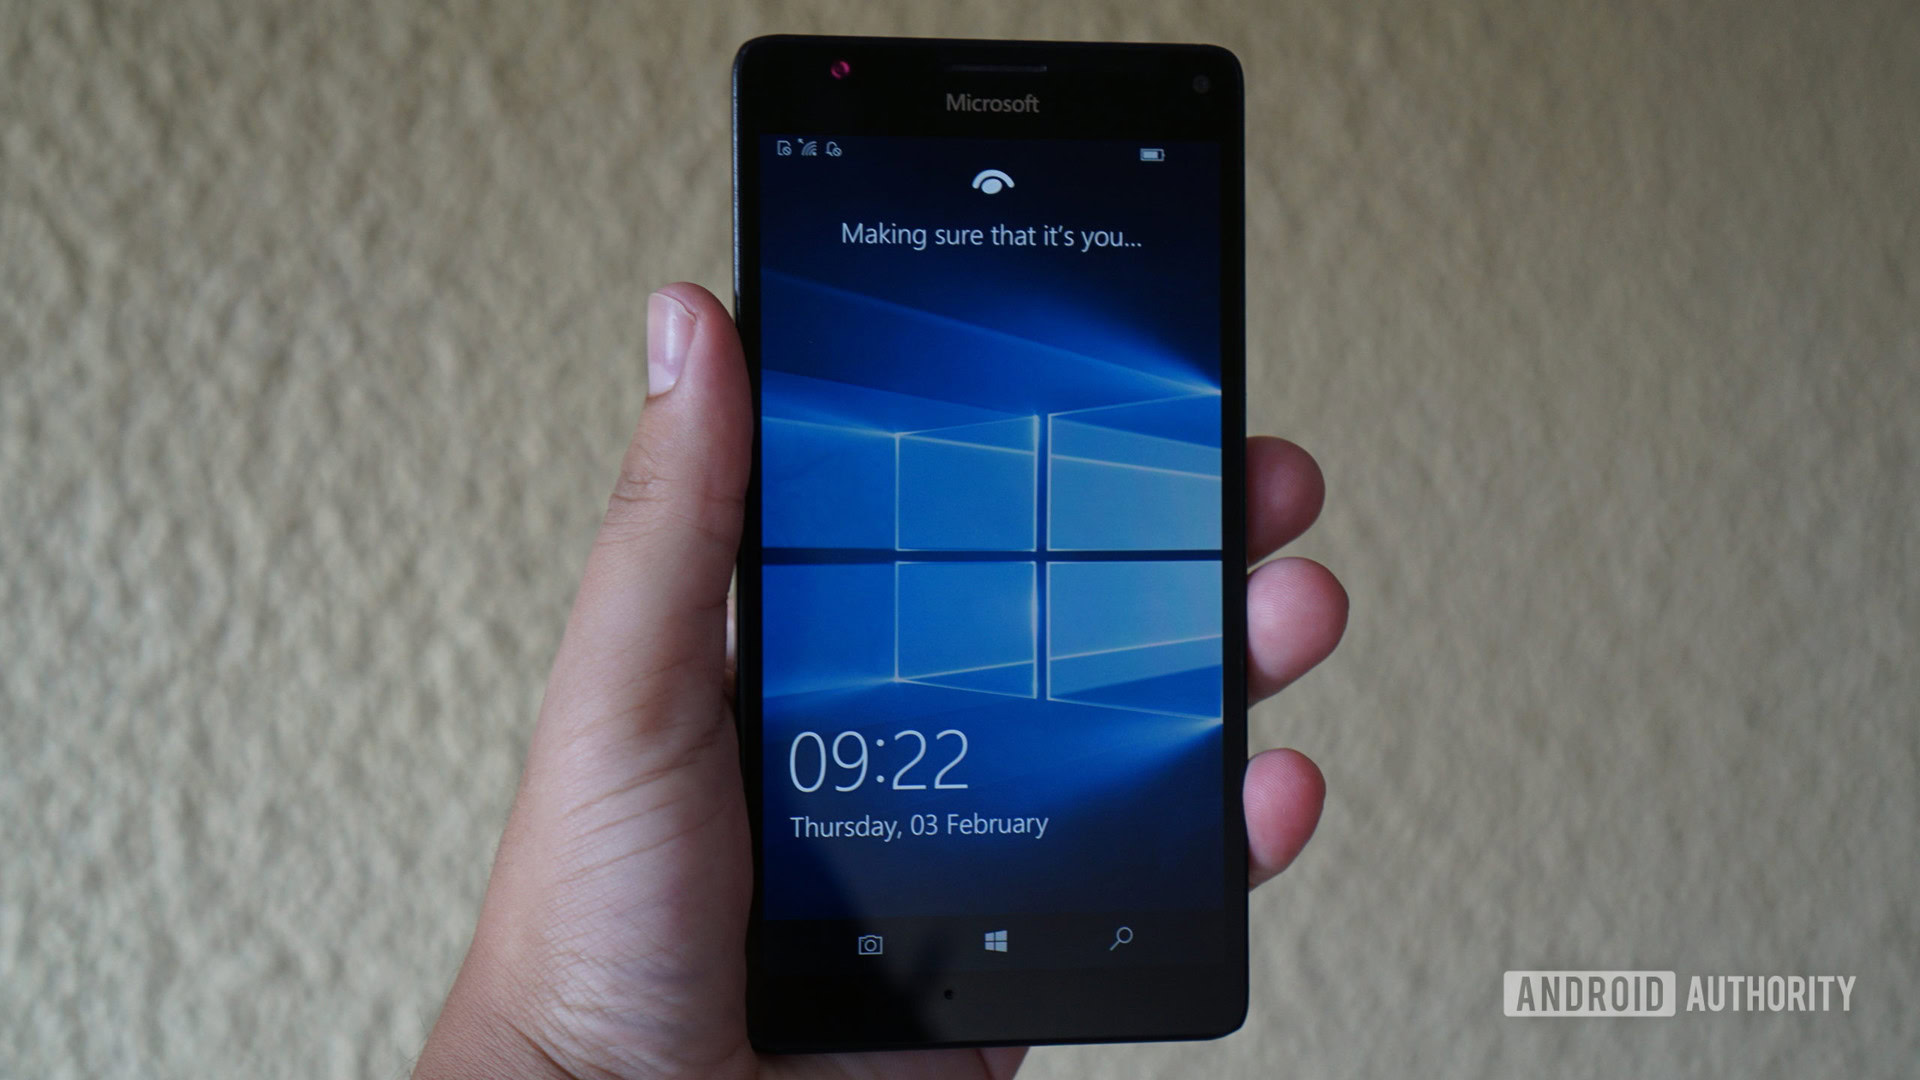 Windows 10 Mobile lockscreen on phone in hand